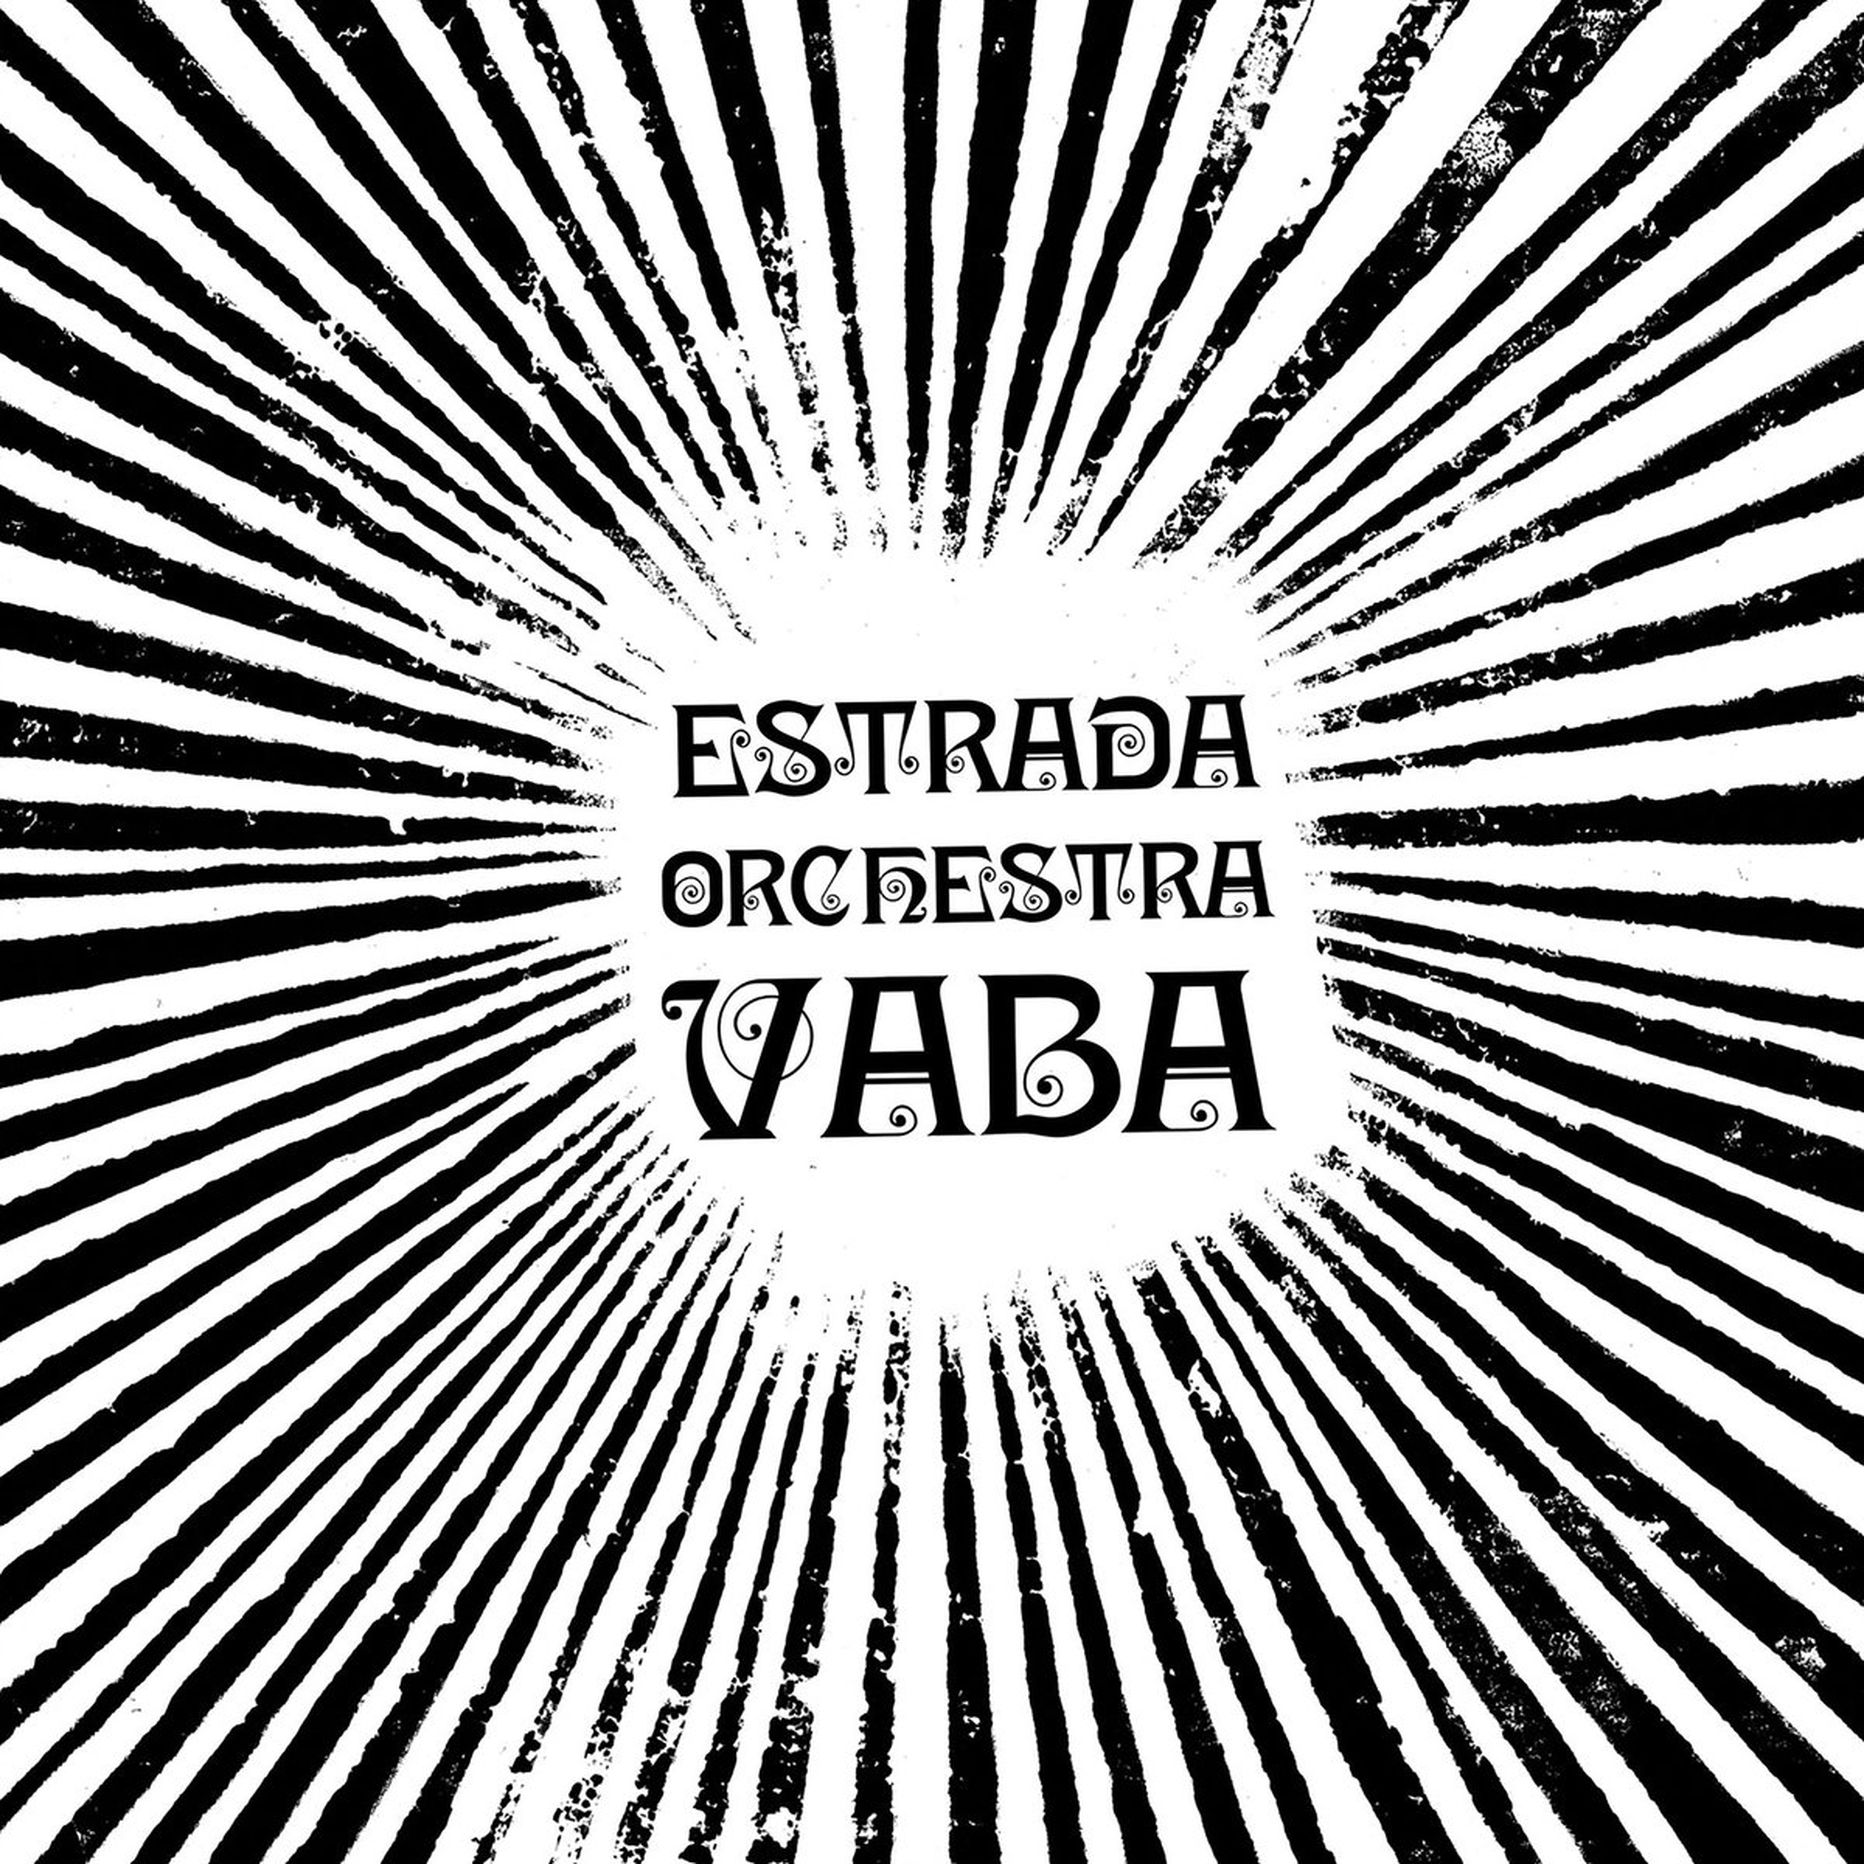 Estrada Orchestra